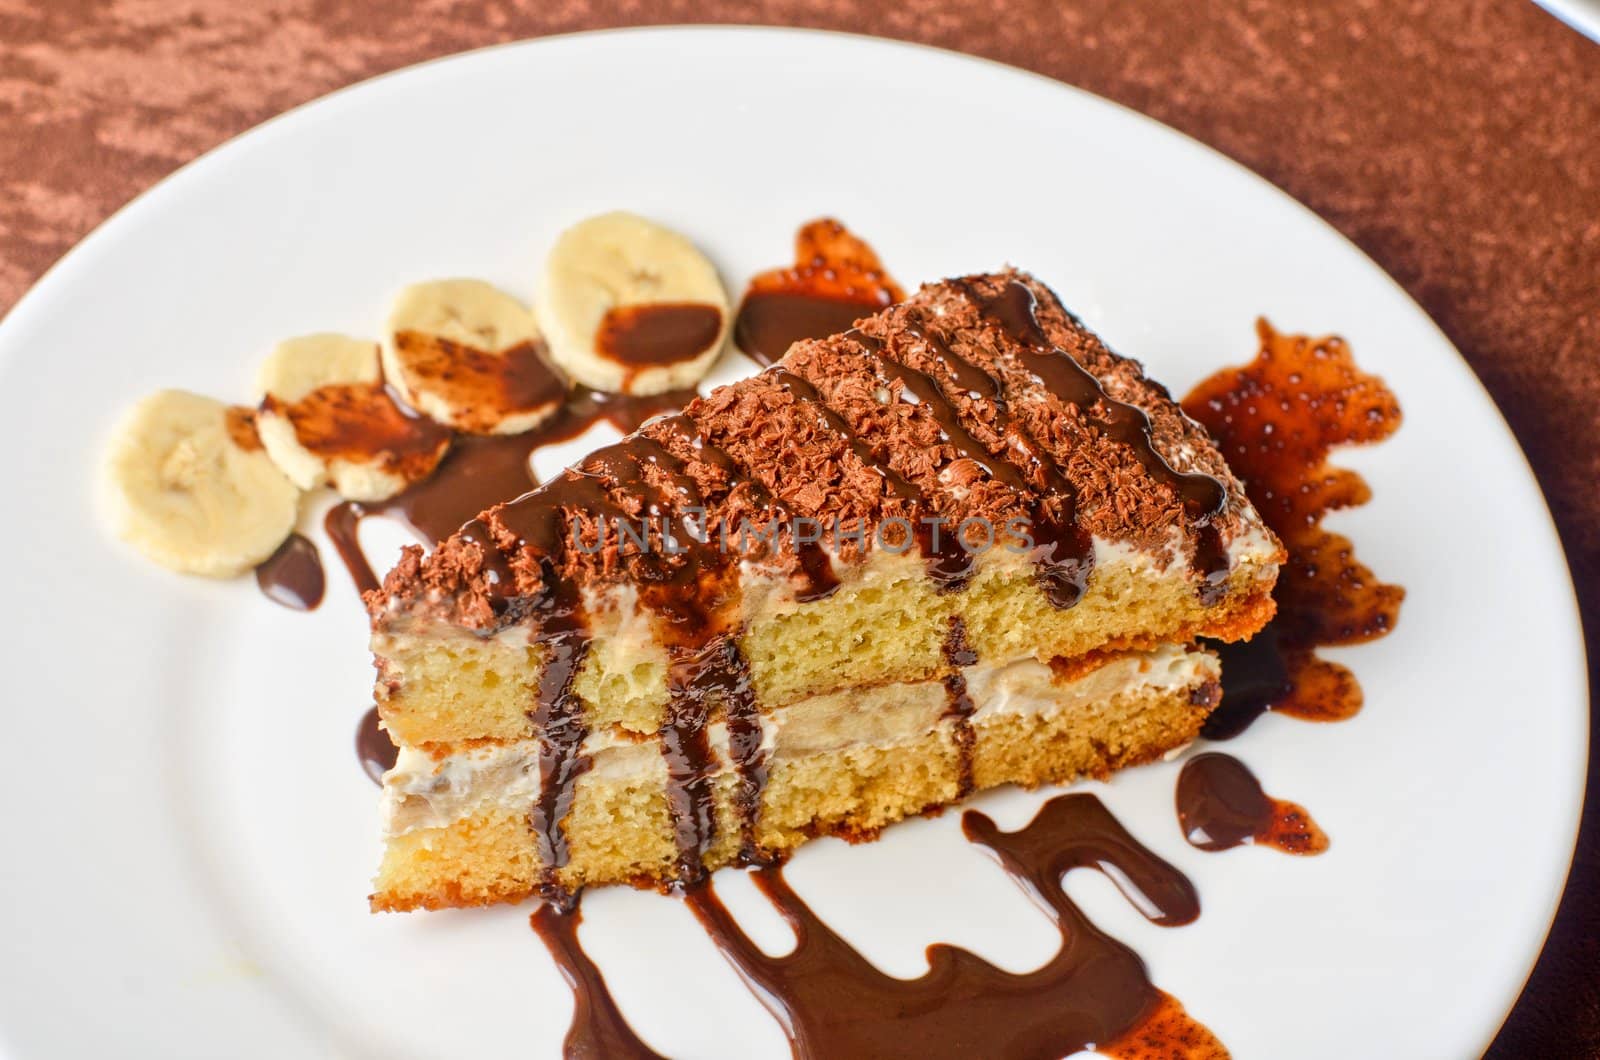 Dessert cake closeup with banana at plate